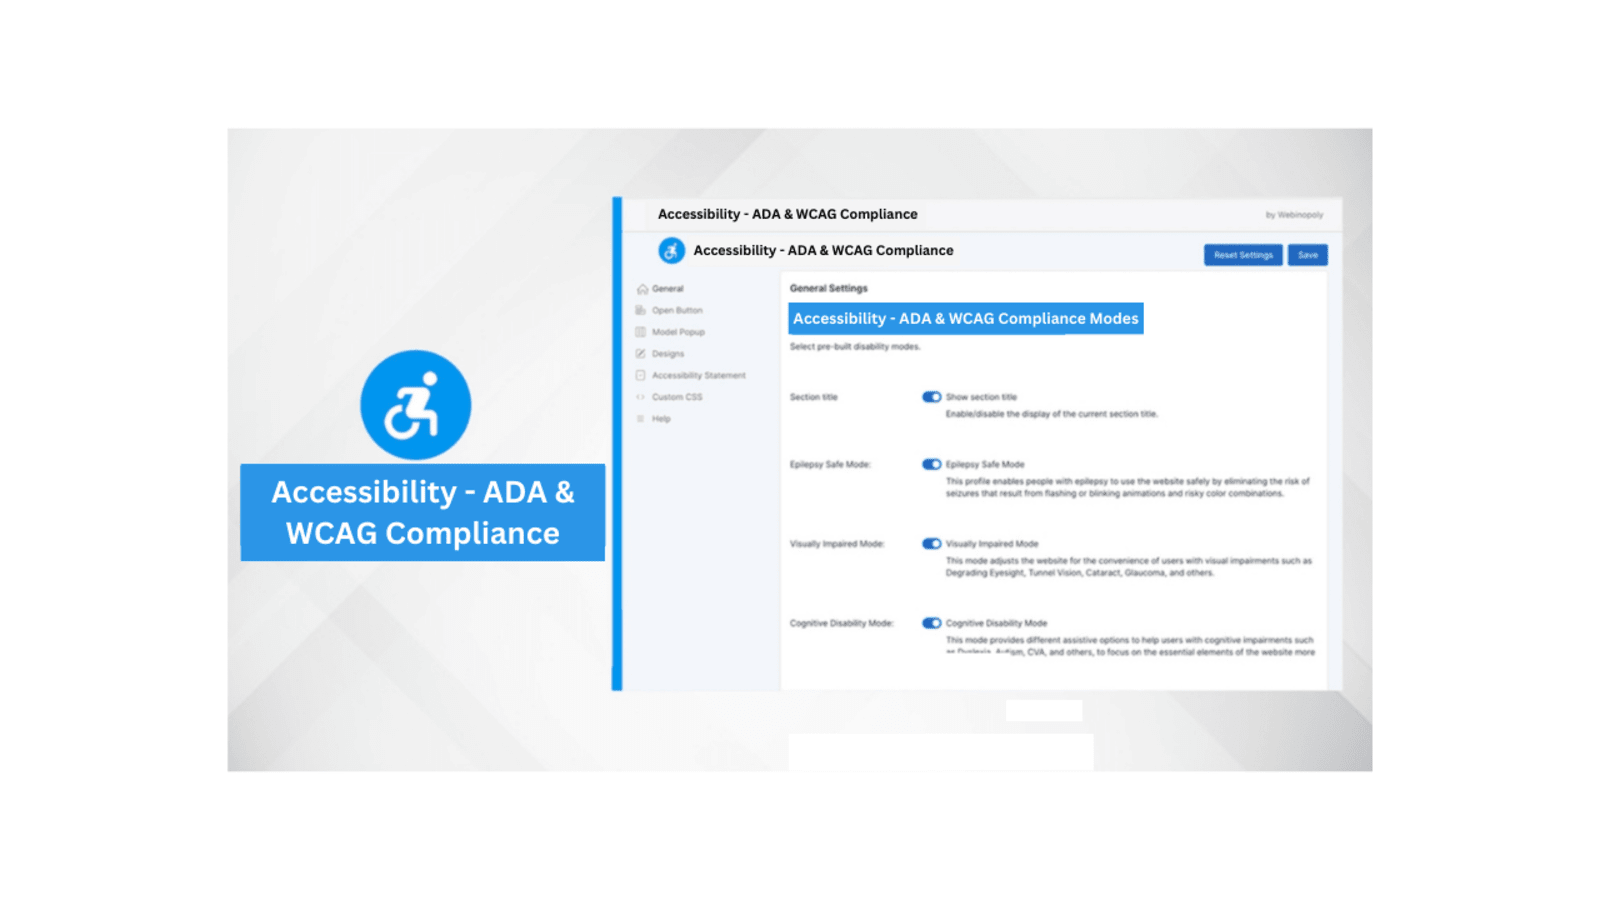 Accessibility - ADA & WCAG Compliance